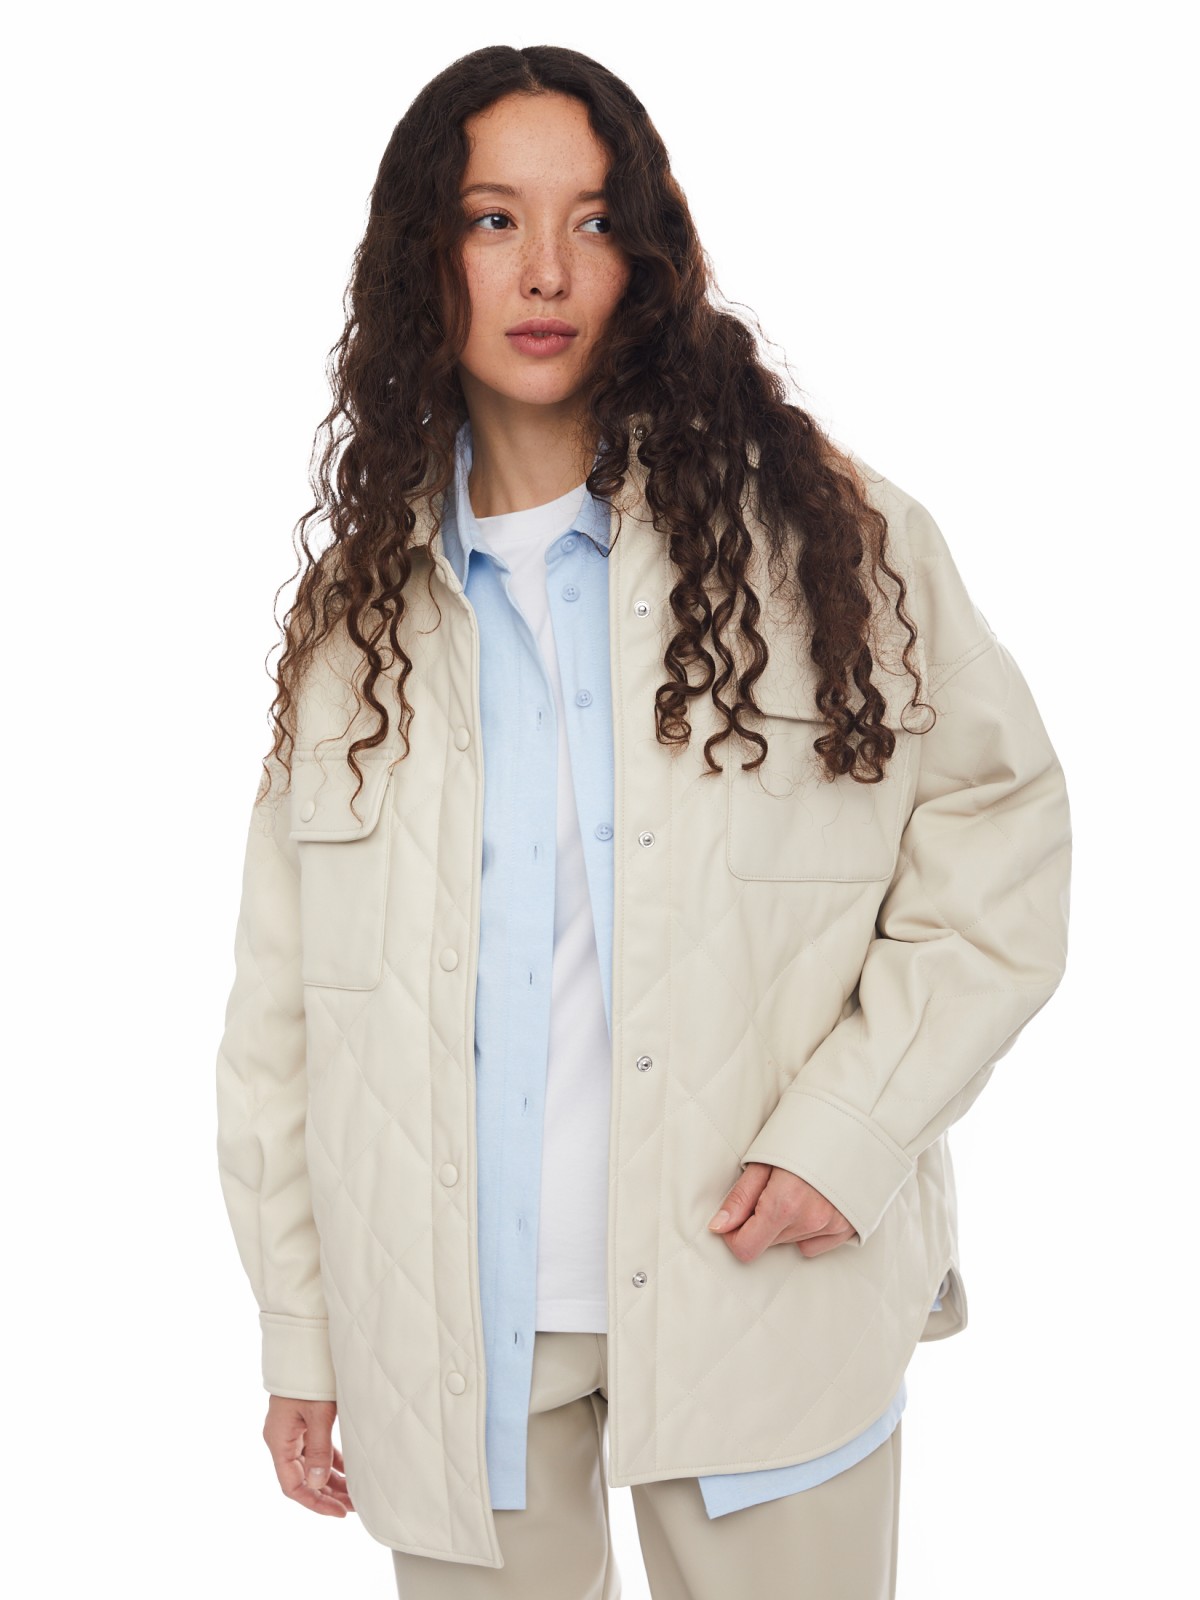 Утеплённая стёганая куртка-рубашка из экокожи на синтепоне zolla 024135150114, цвет молоко, размер XS